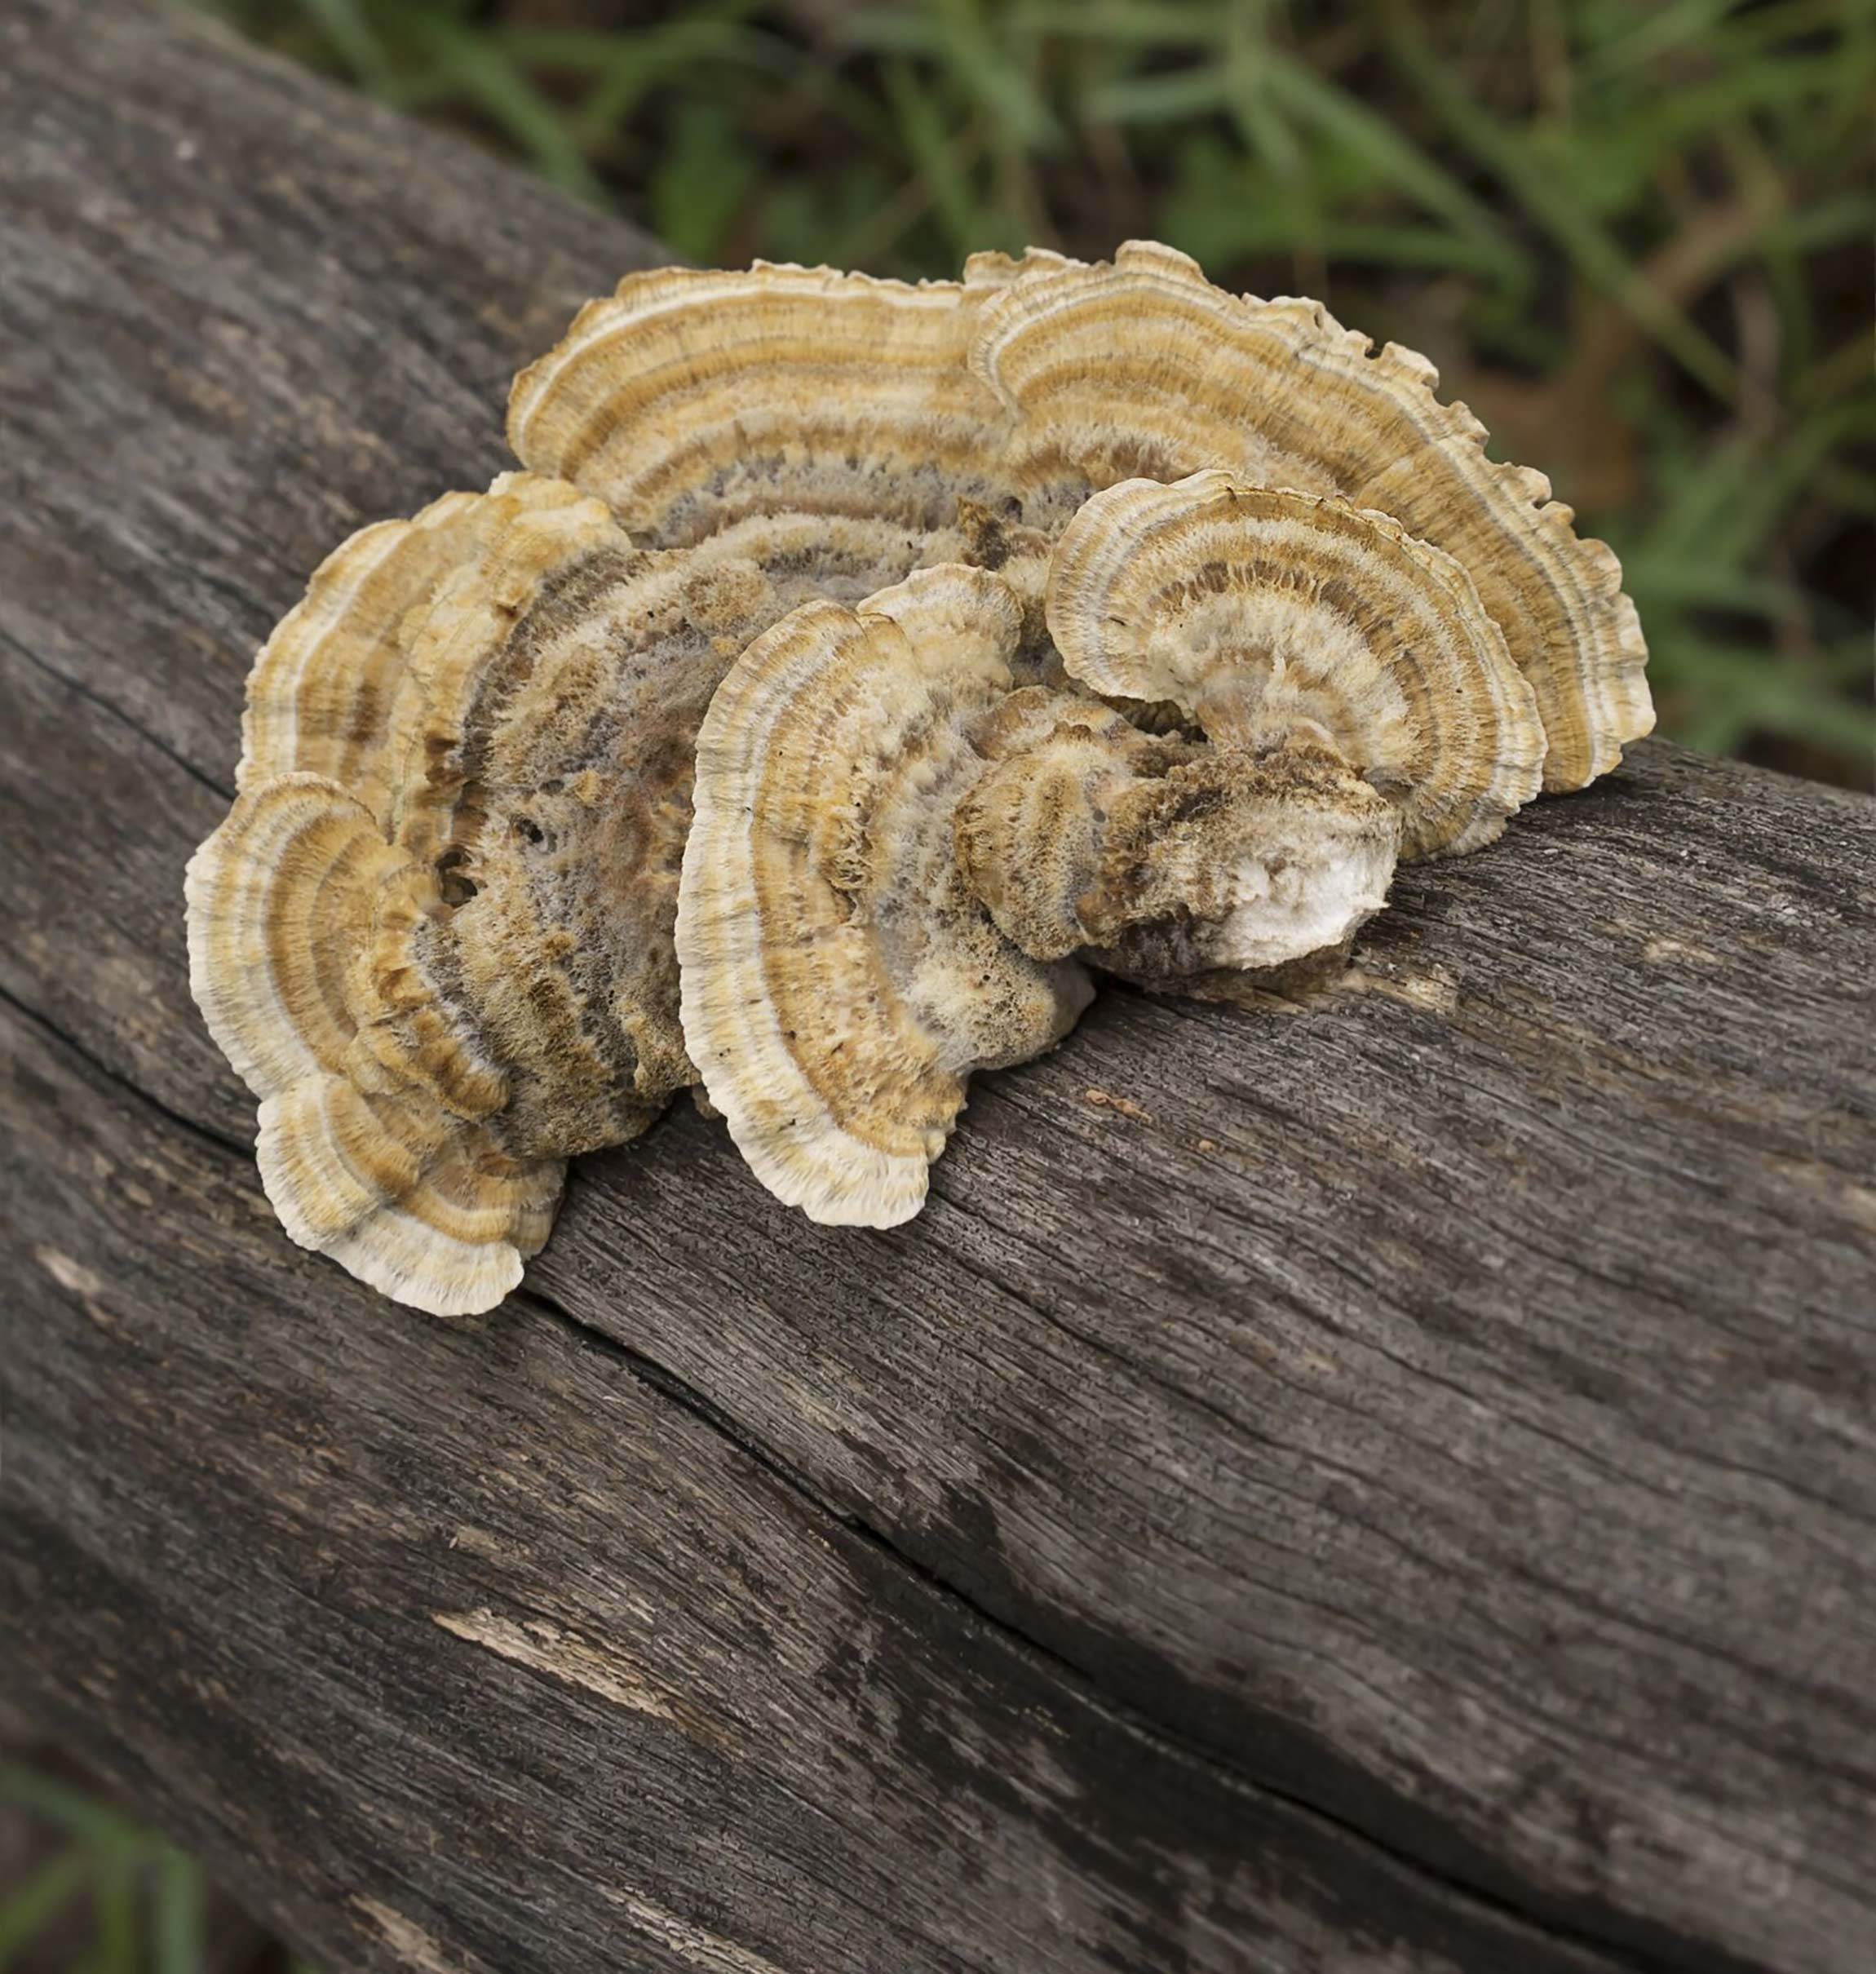 fungus on a log